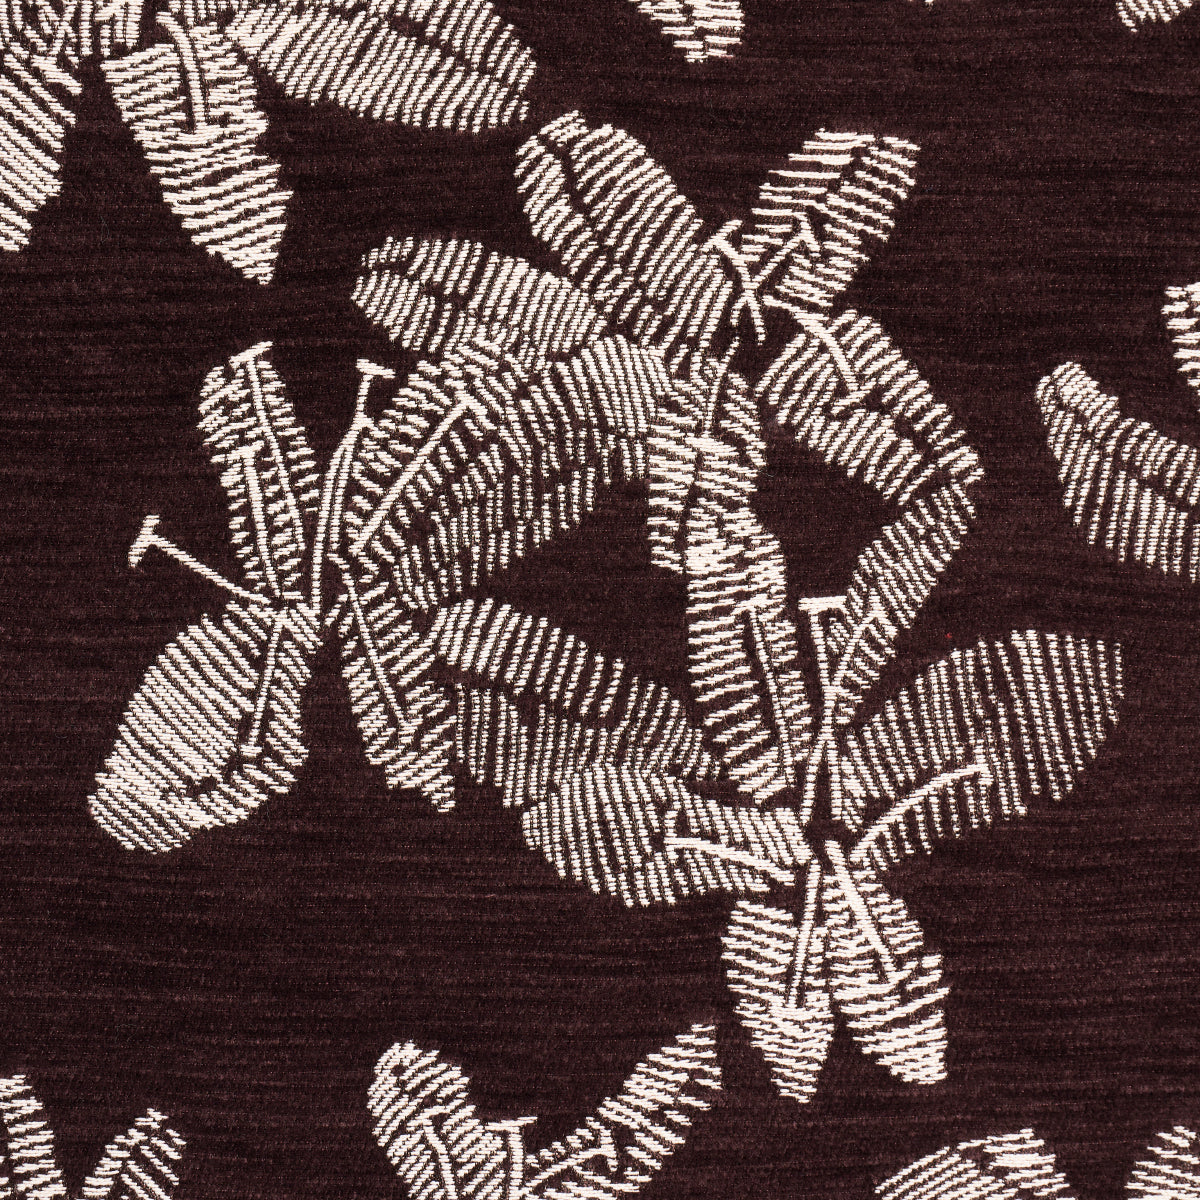 Purchase 83811 | Hibiscus, Plum - Schumacher Fabric